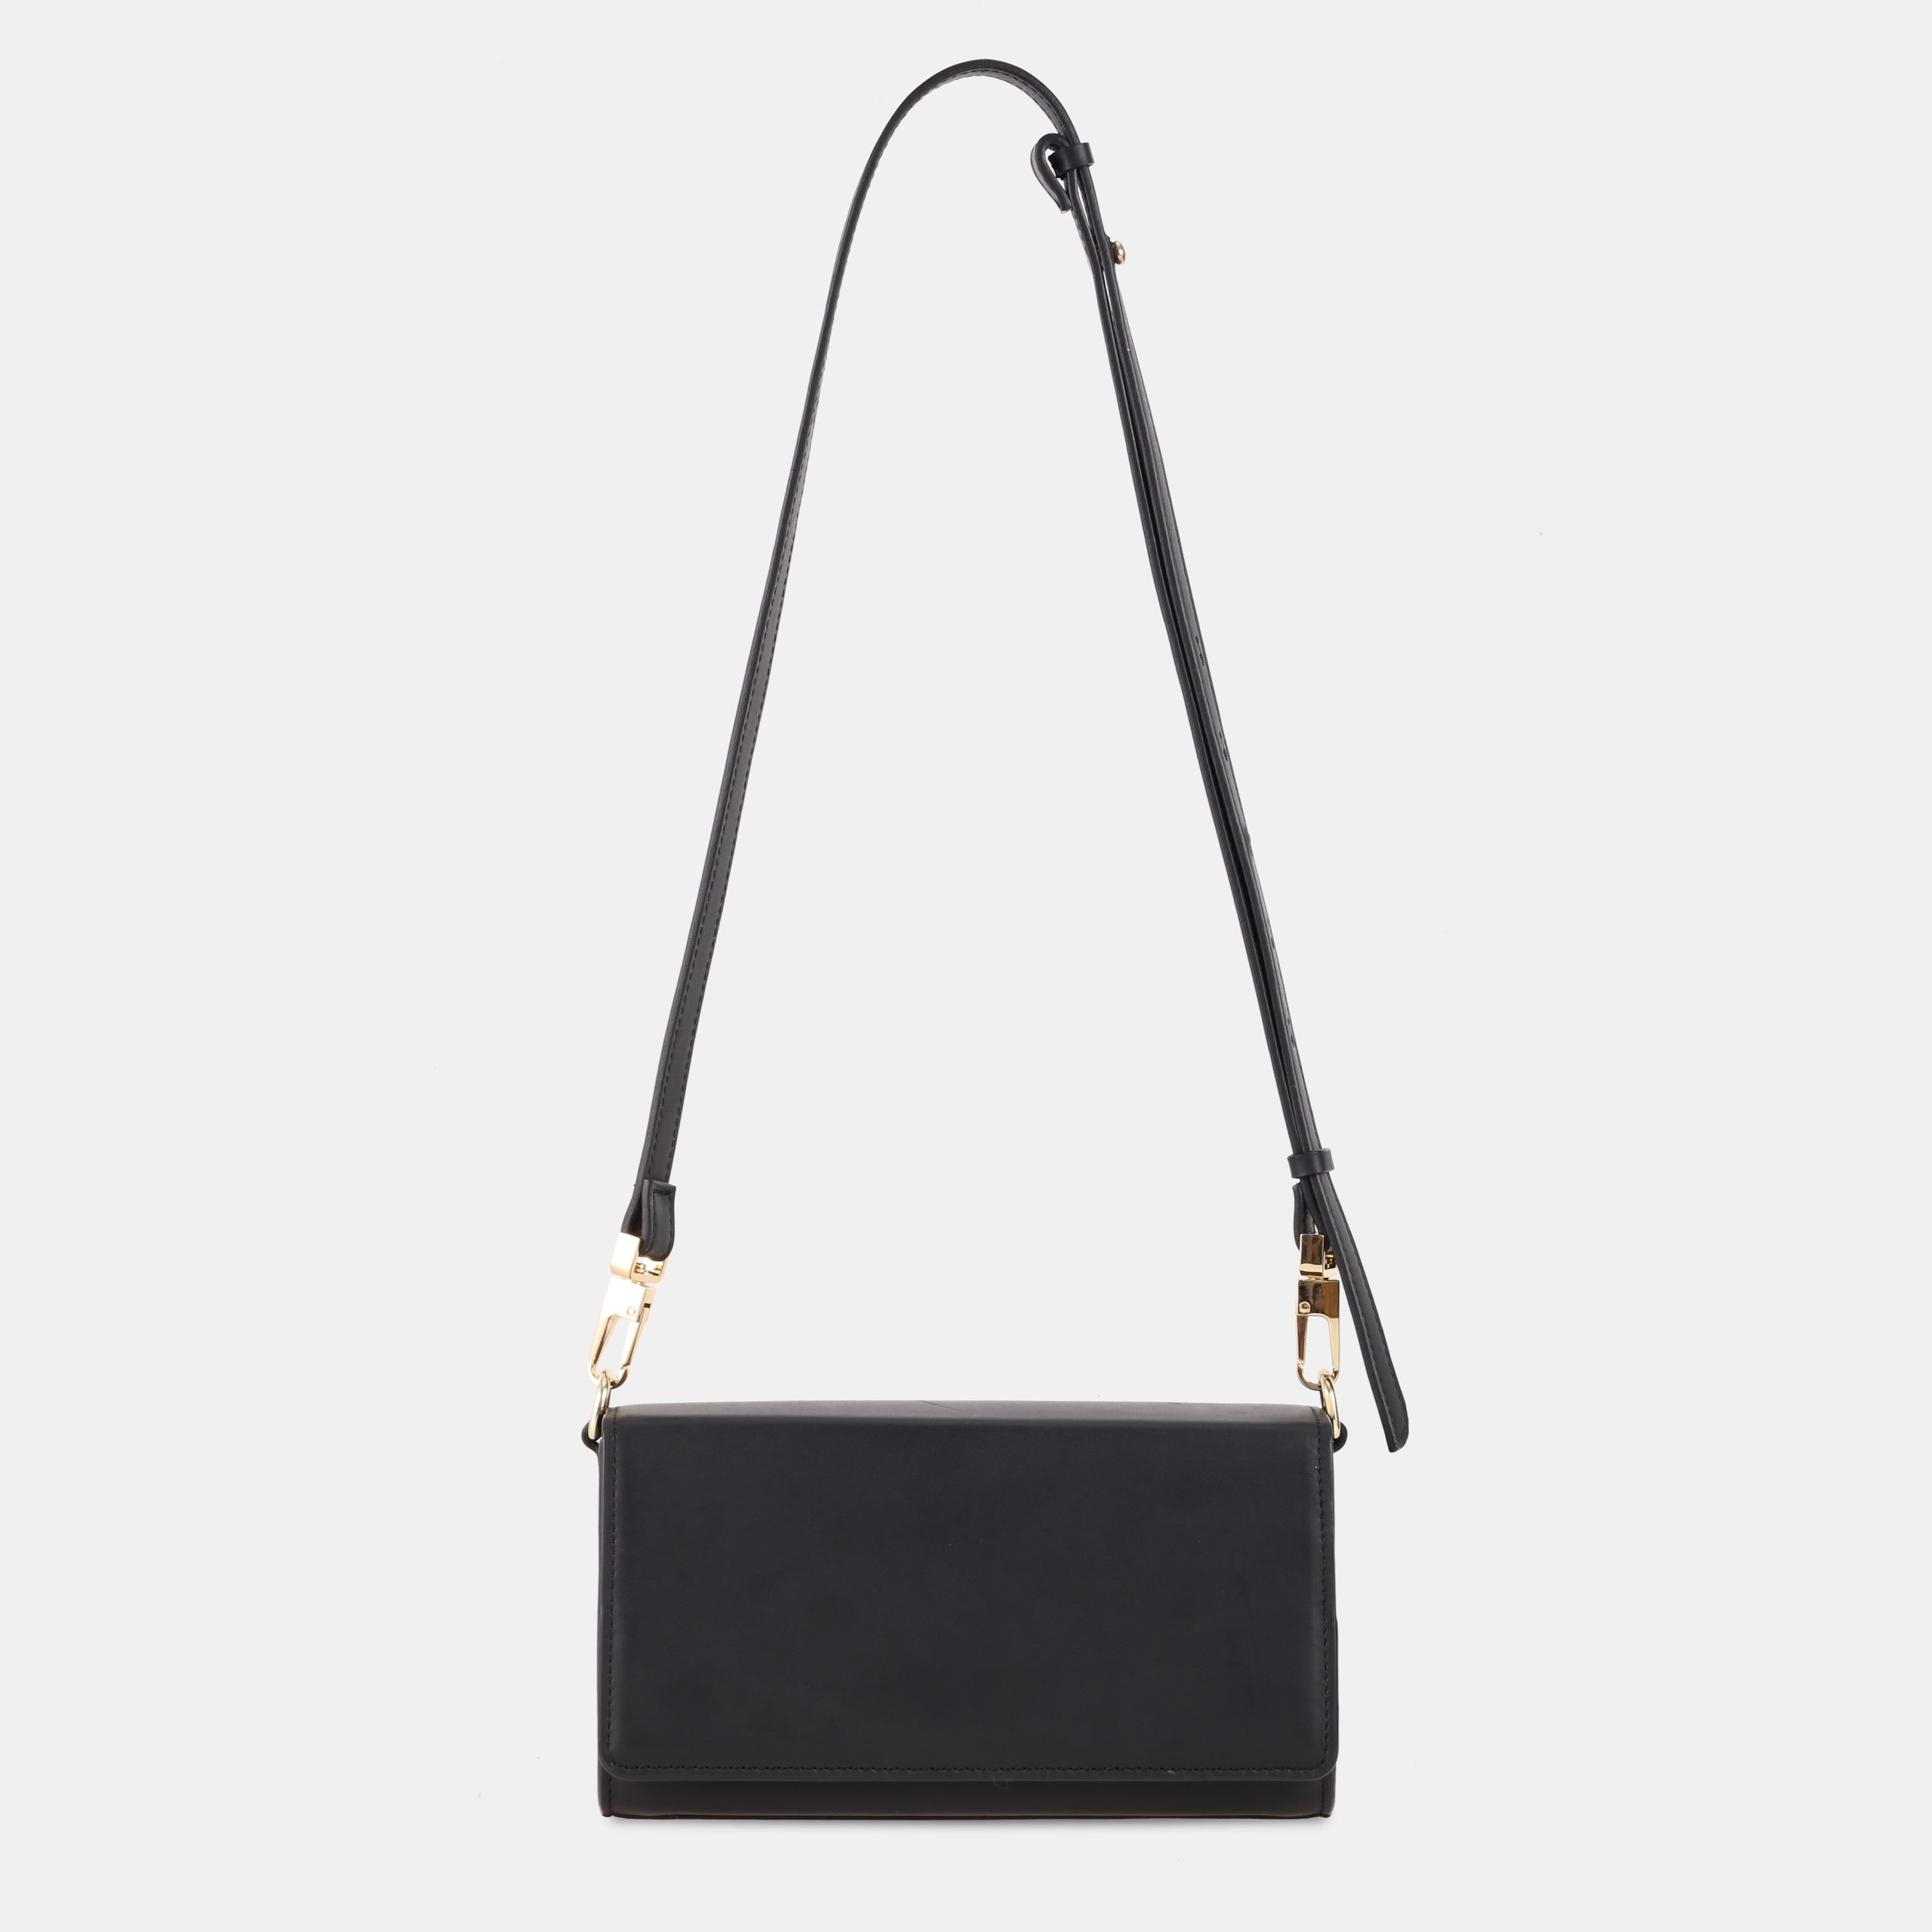 KAMELEON handbag black (genuine leather)